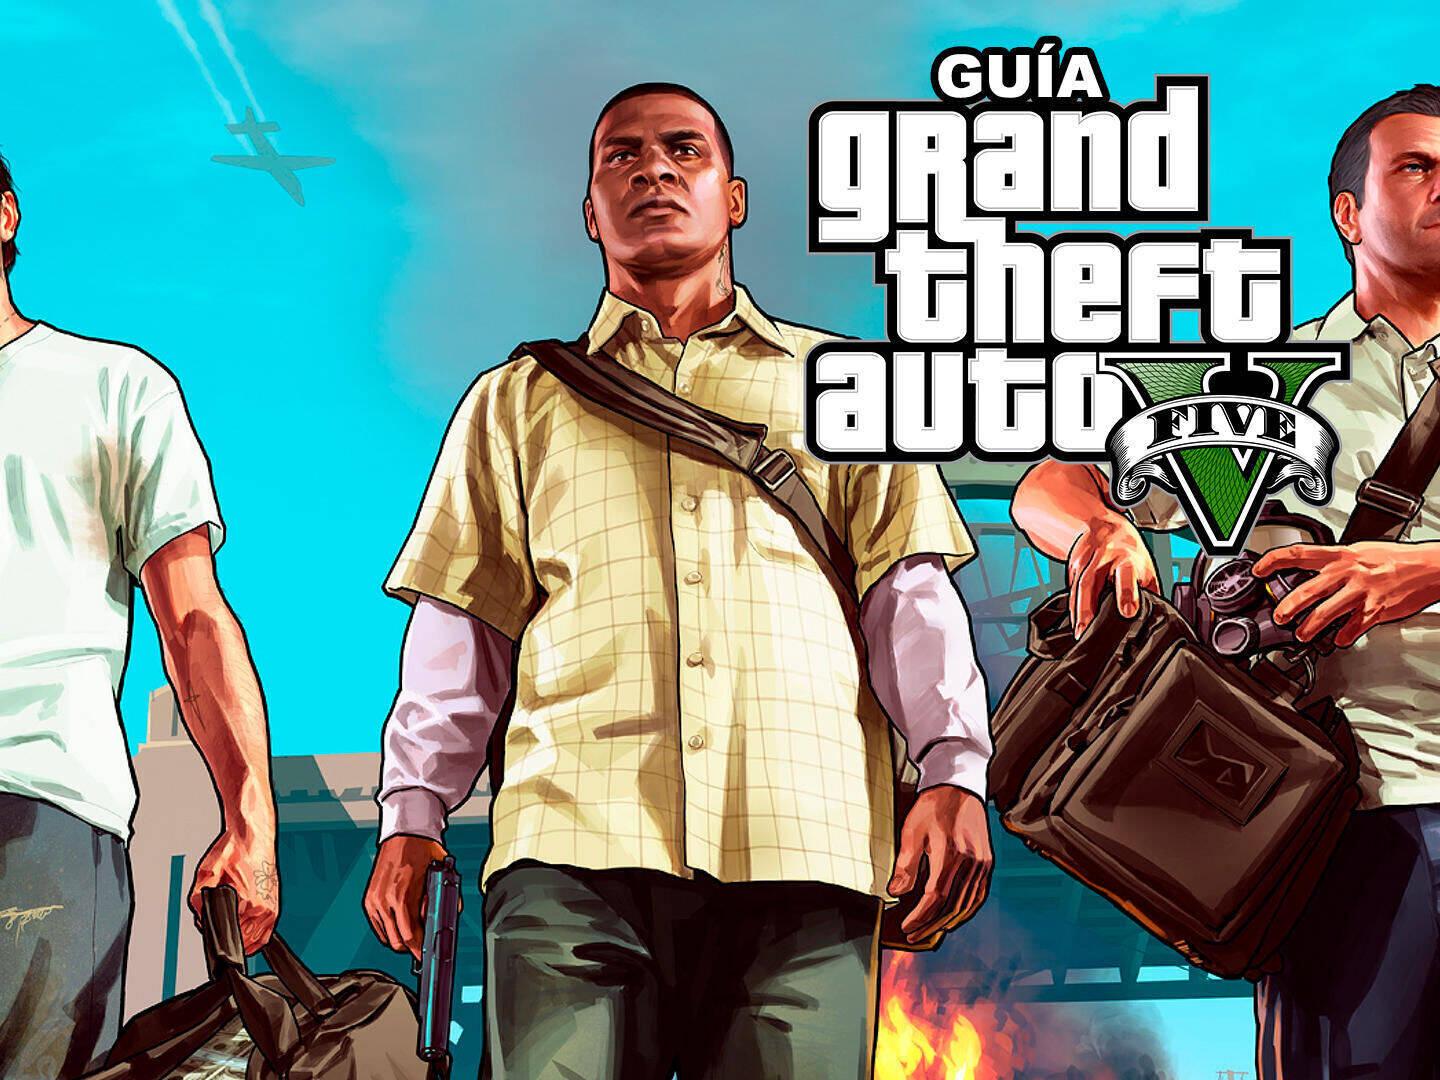 Grand Theft Auto V - Videojuego (PS4) - Vandal